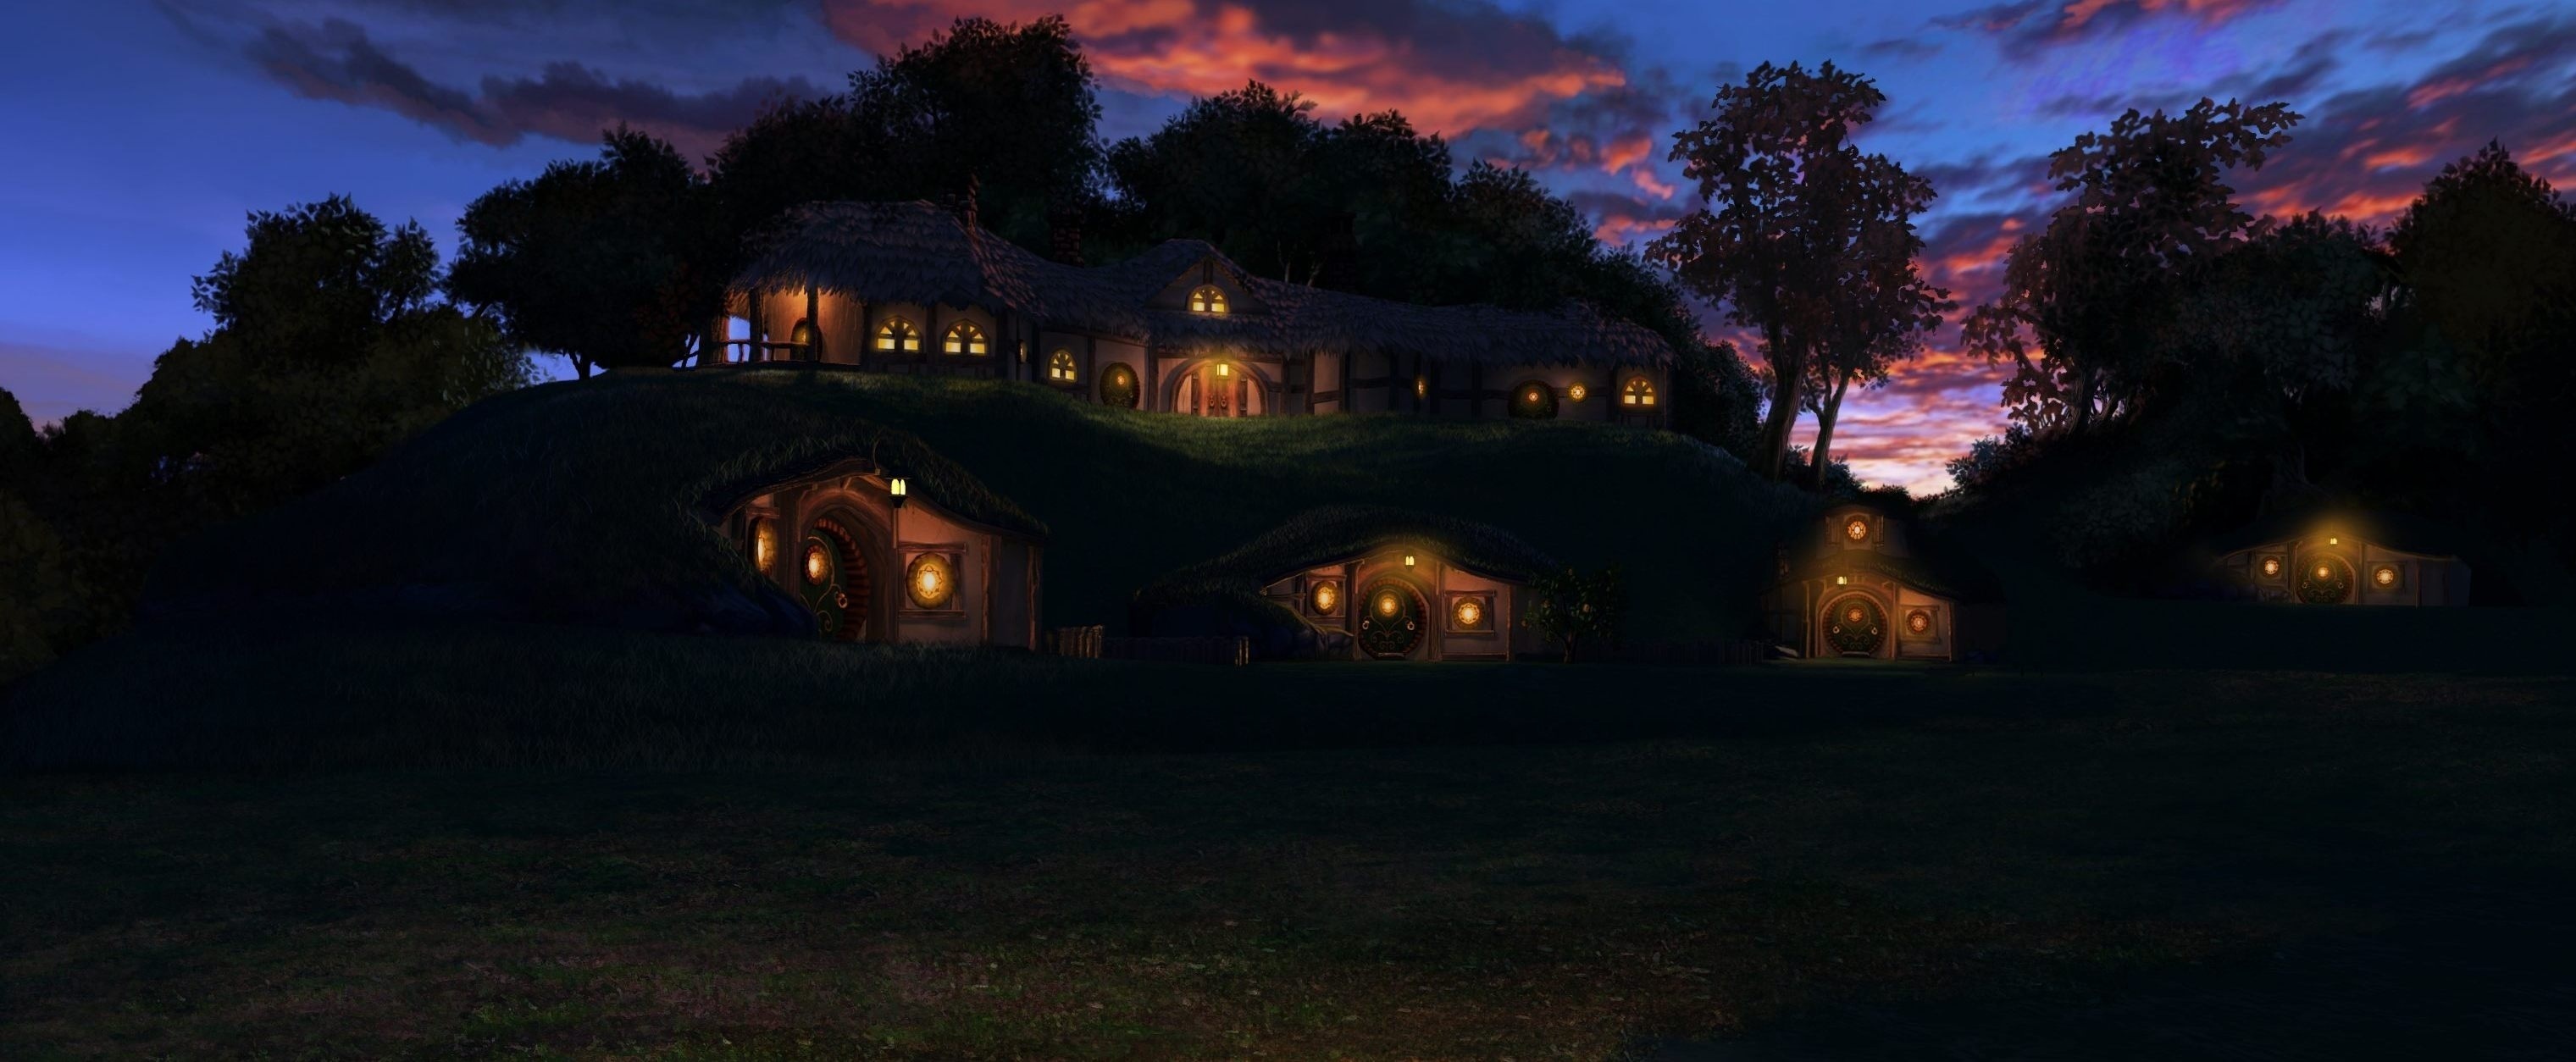 Lord of the Rings, Hobbit lifestyle, Beautiful sunset, Nature's wonders, 3050x1260 Dual Screen Desktop